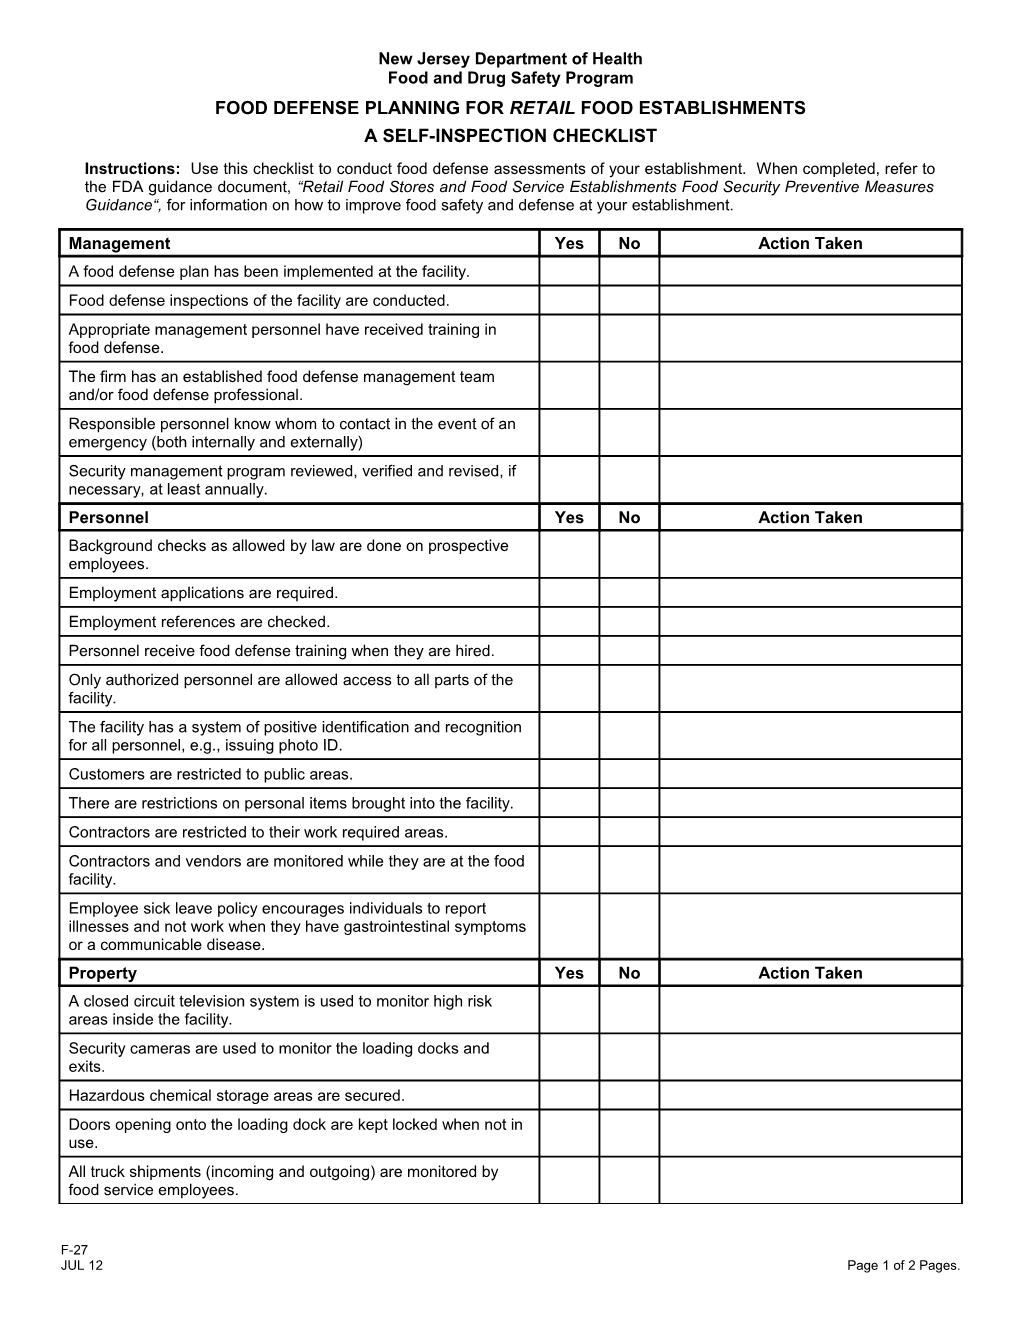 F-27, Self-Inspection Checklist (Retail)